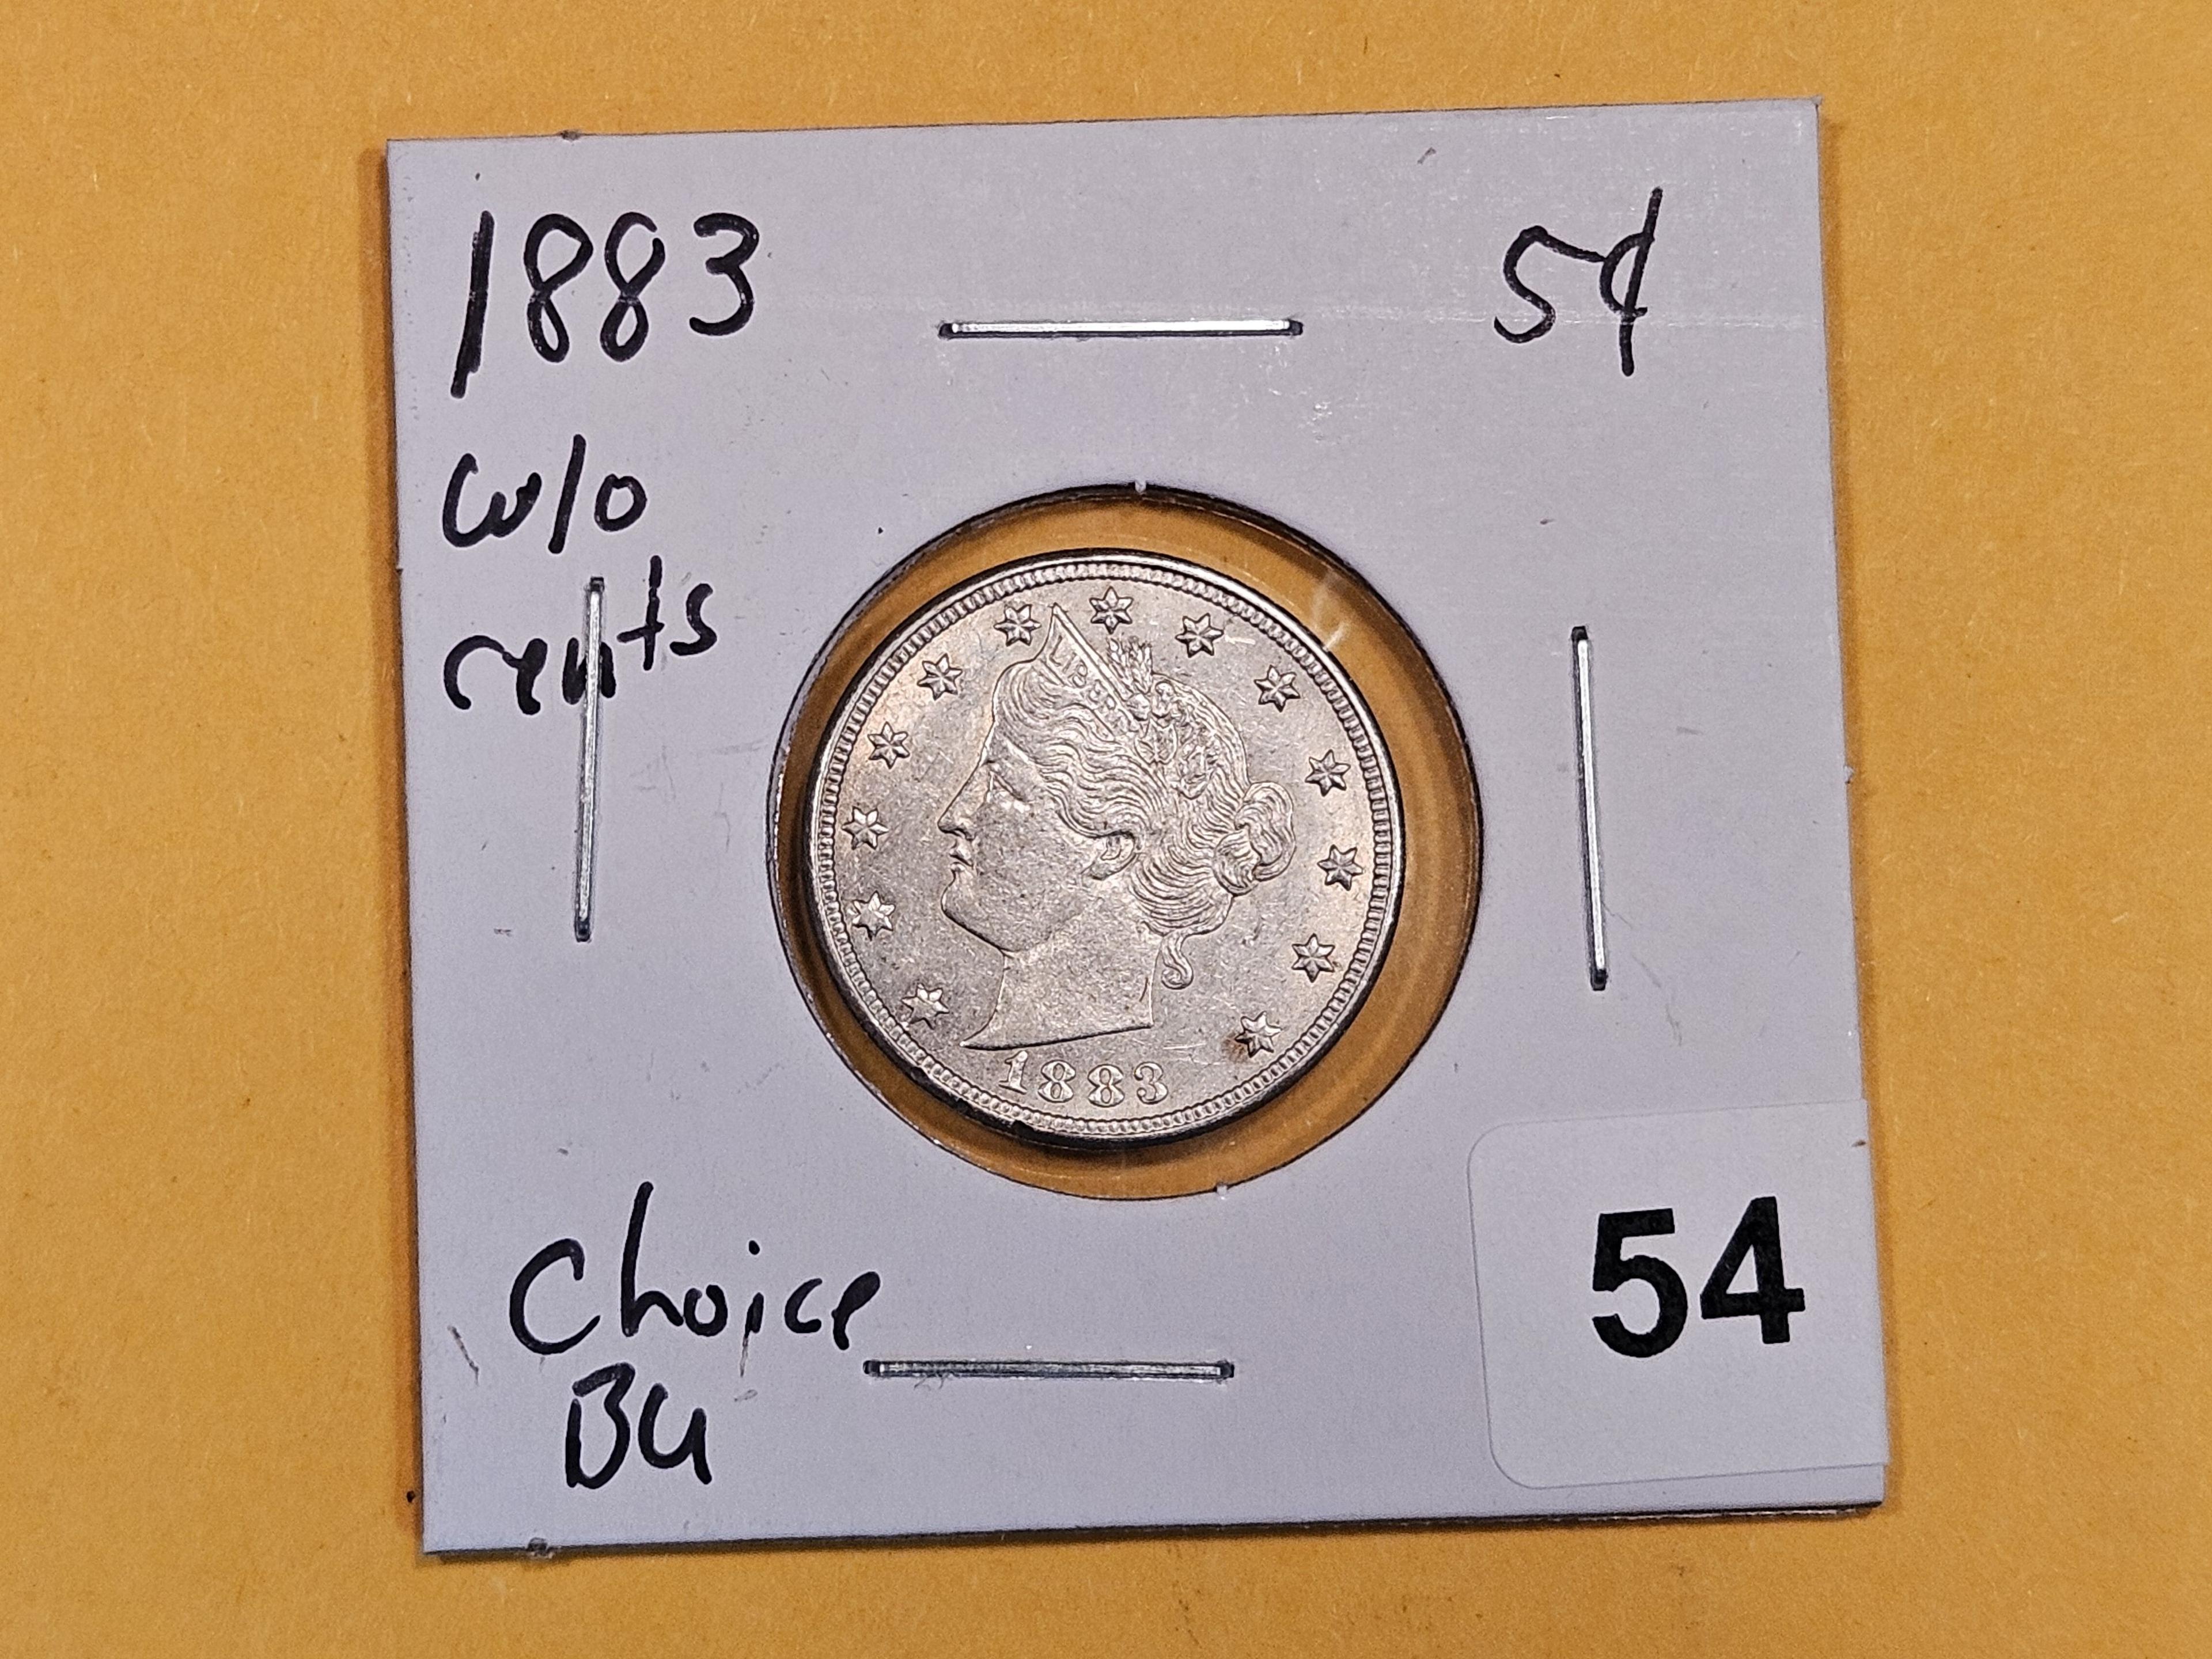 Choice Brilliant Uncirculated 1883 W/O Cents Liberty "V" Nickel